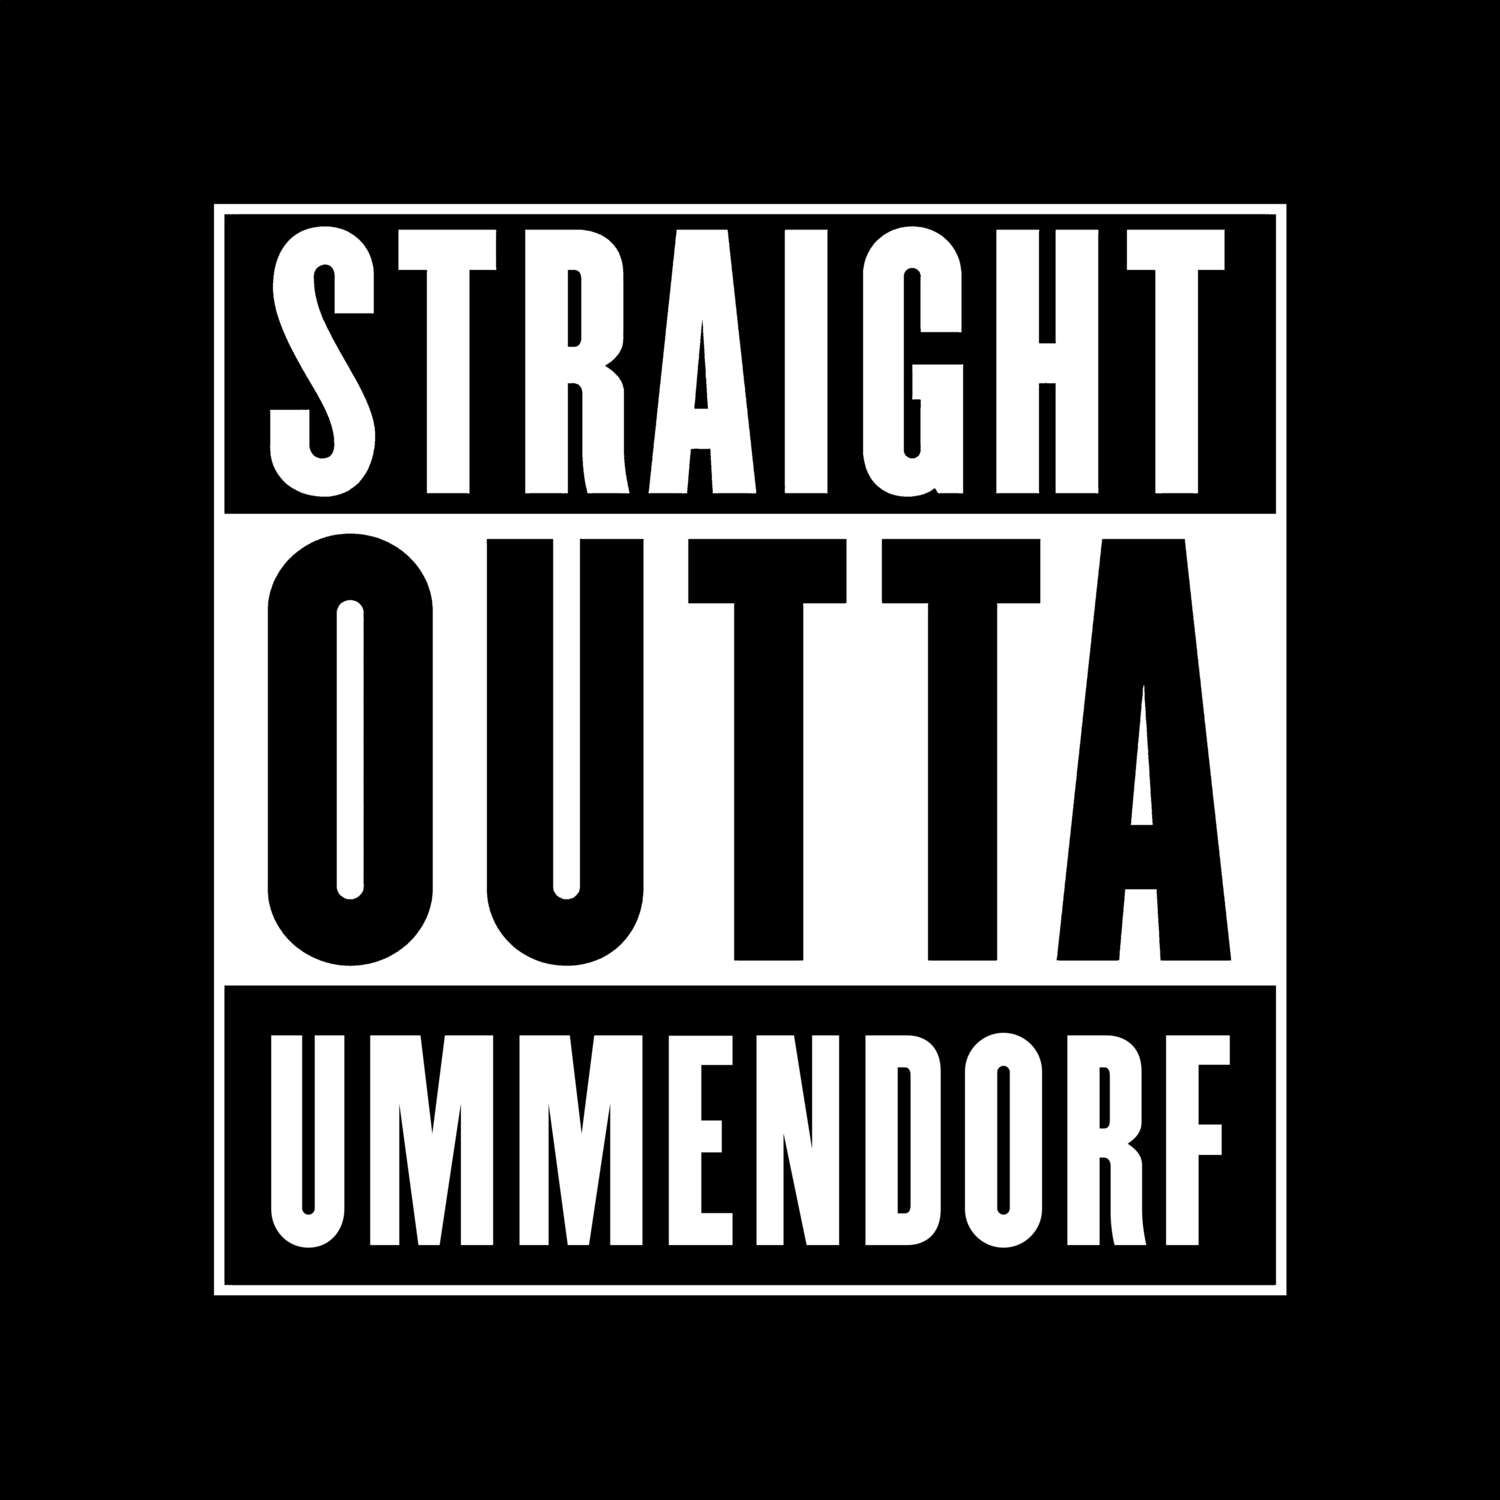 Ummendorf T-Shirt »Straight Outta«